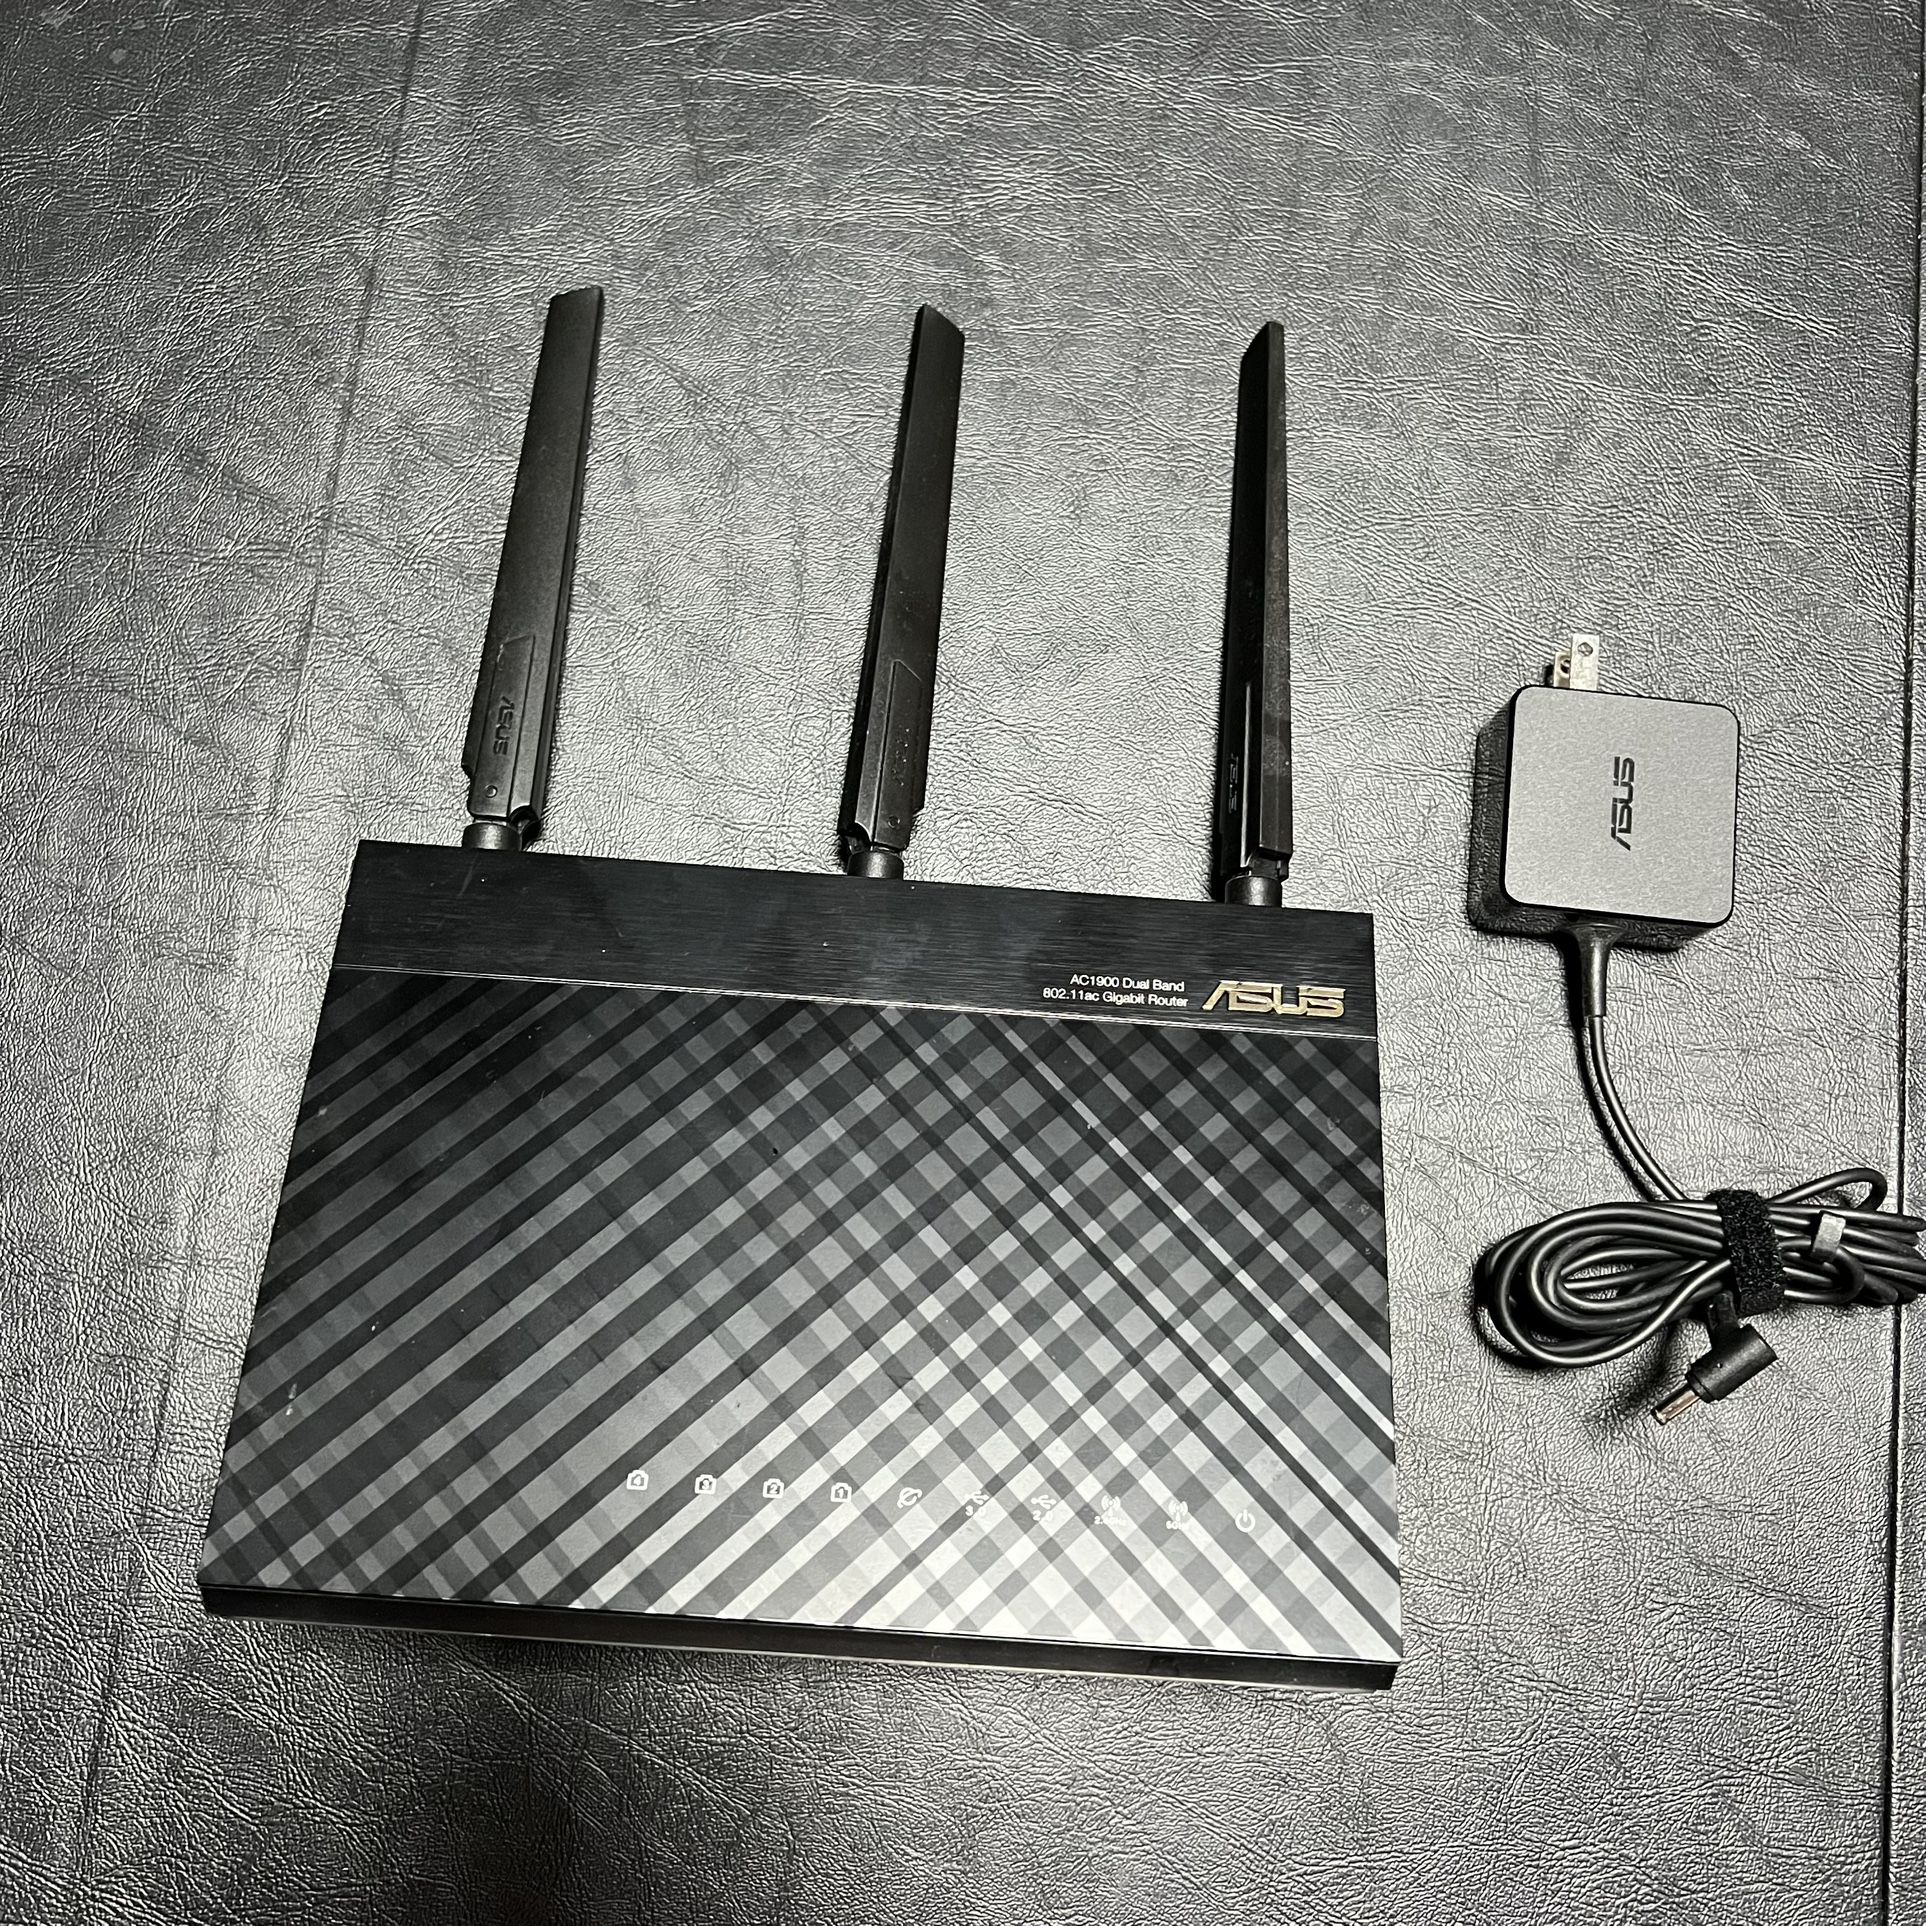 ASUS AC1900 Dual Band Gigabit Internet Wi-Fi Router